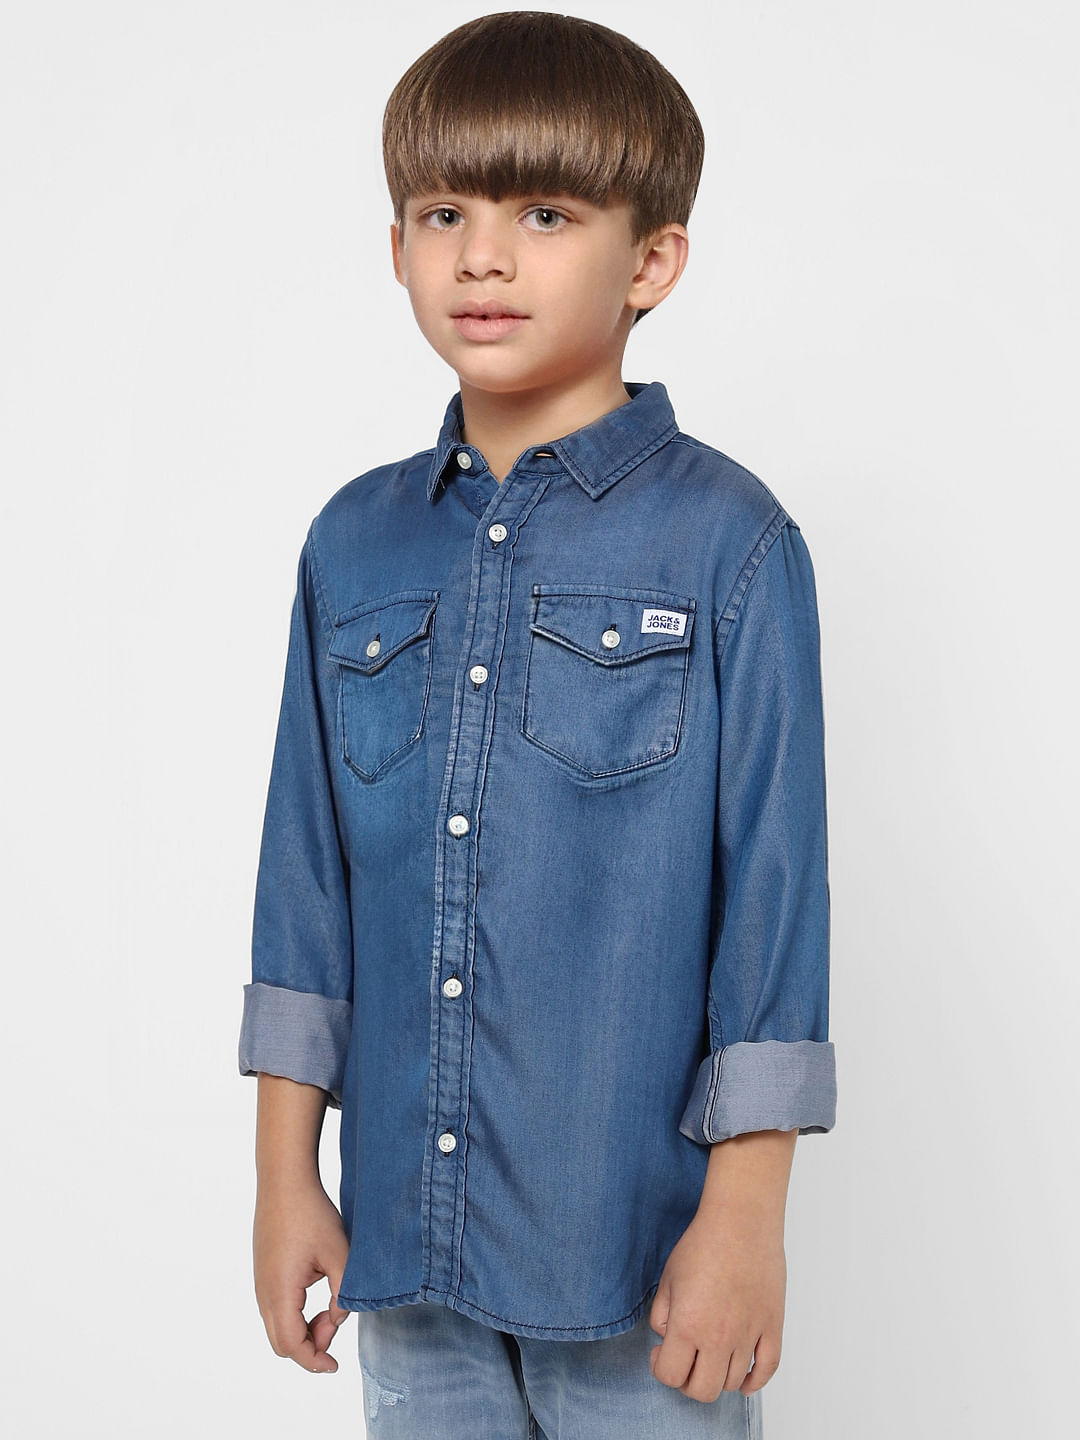 Codaisy Blue Denim Shirt (S) Full Sleeve : Amazon.in: Fashion